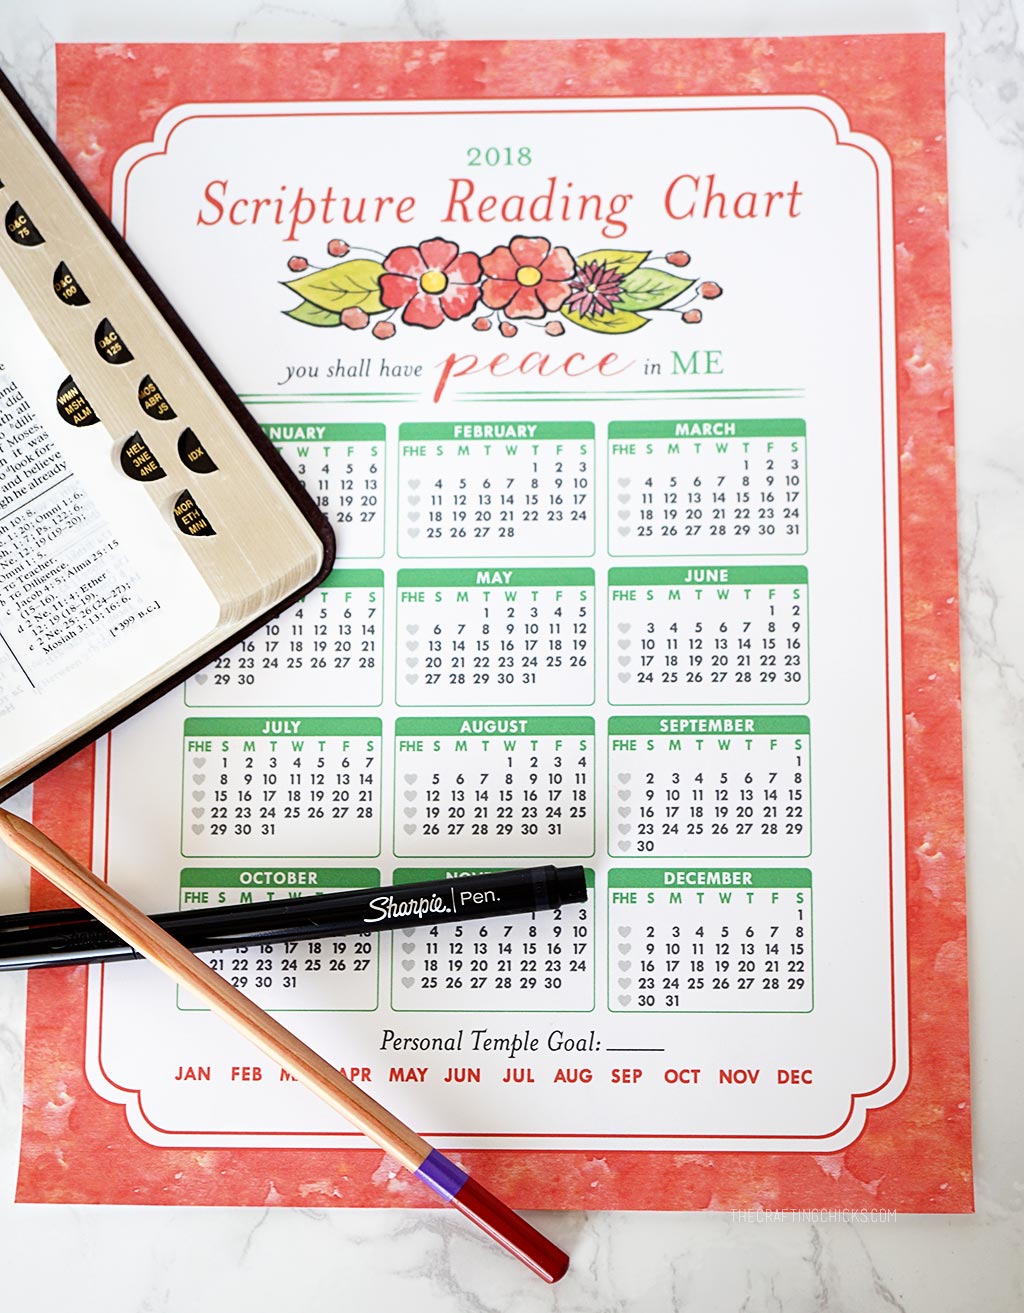 LDS Scripture Reading Chart 2018